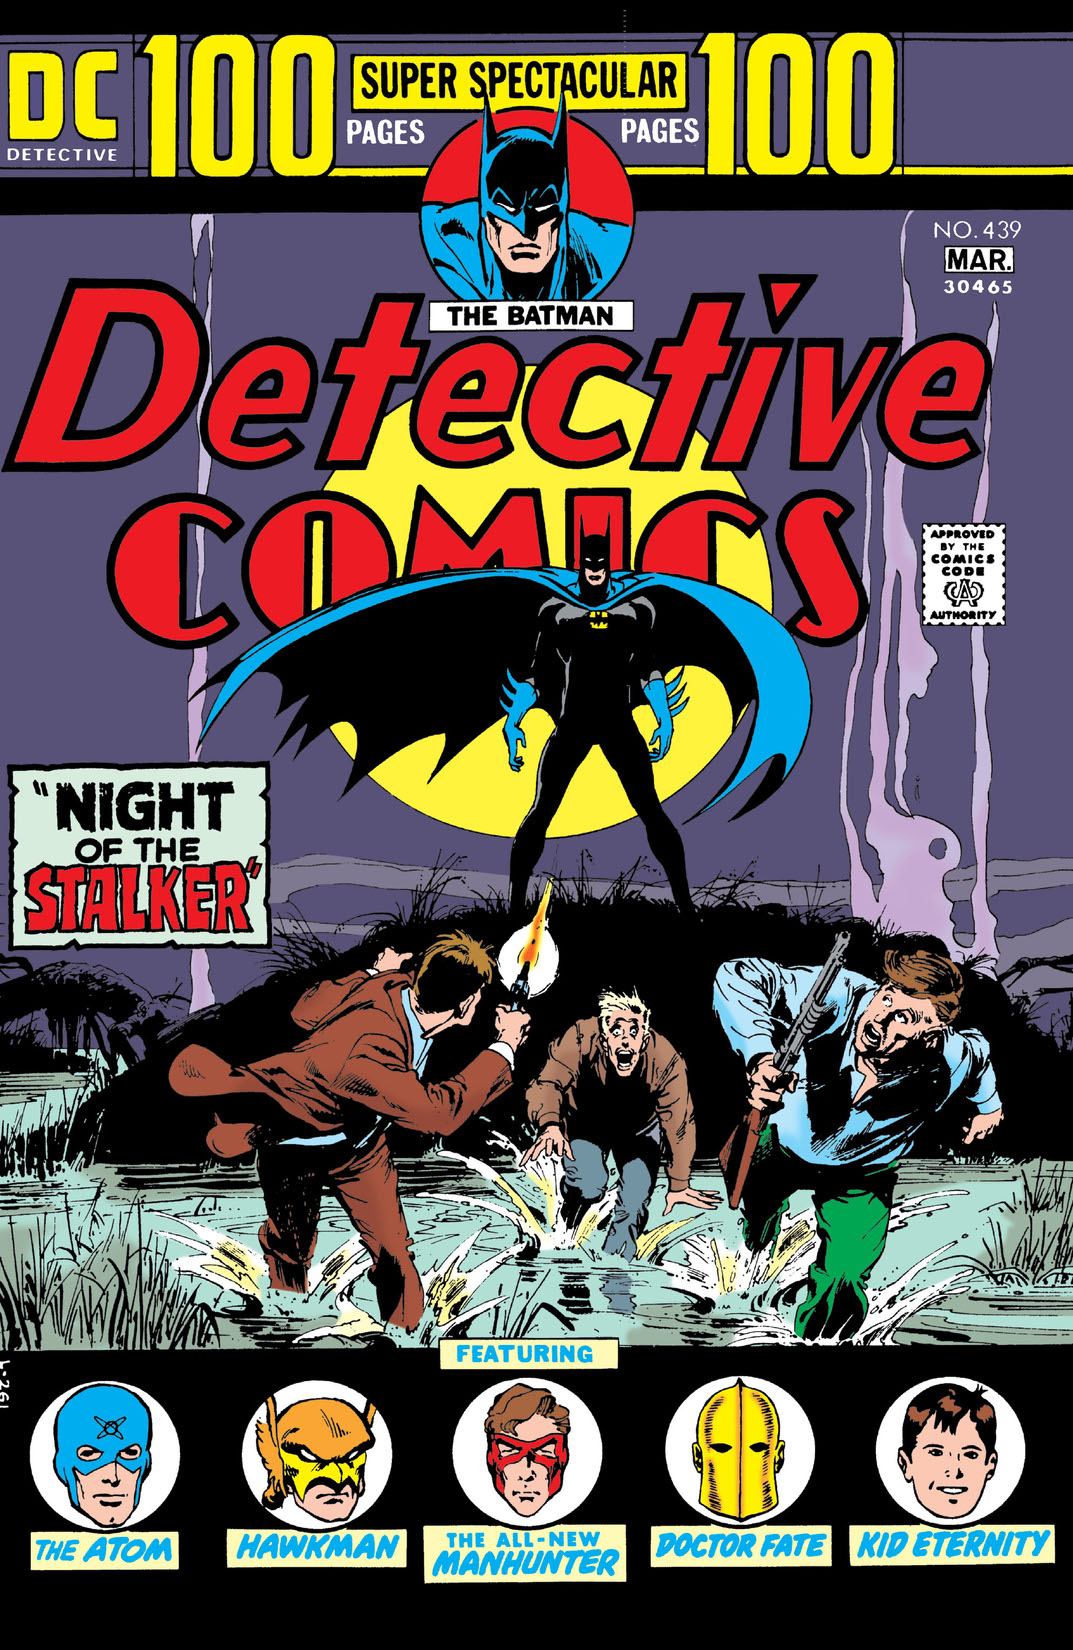 Detective Comics (1937-) #439 preview images